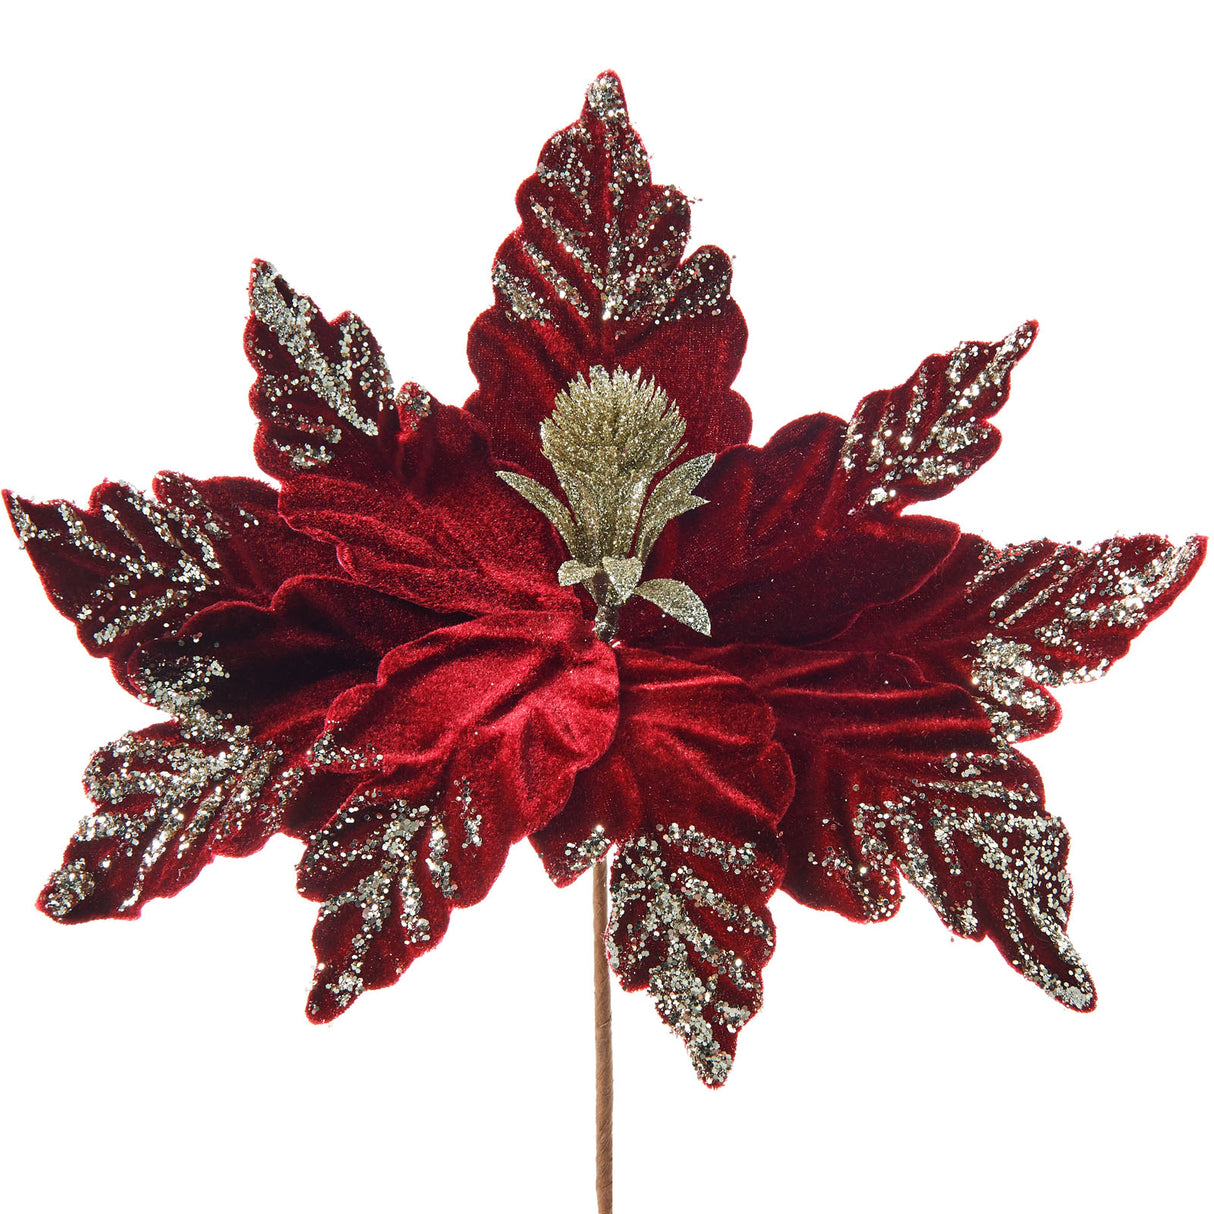 Artificial Poinsettia Flower, Red, 30 cm